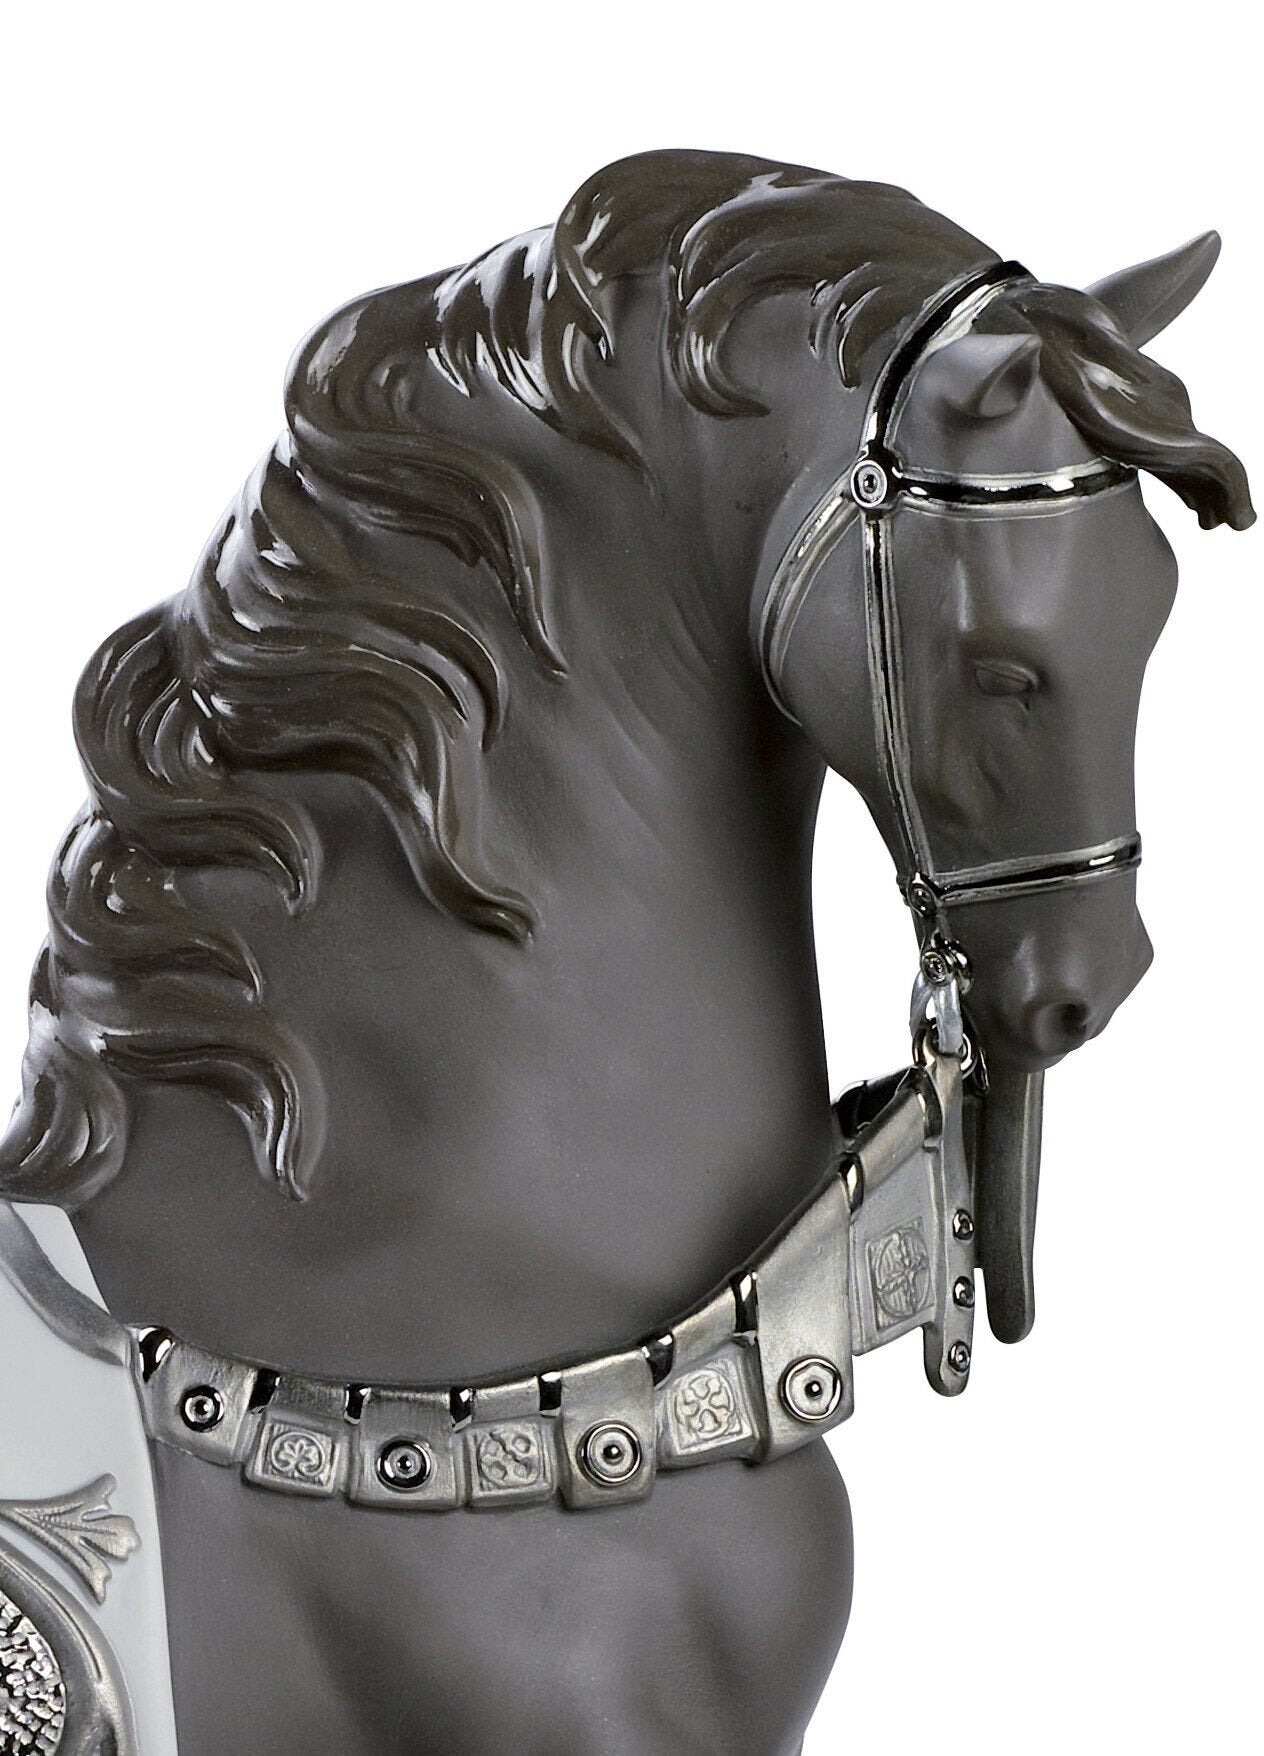 A Regal Steed Horse Sculpture Silver Lustre